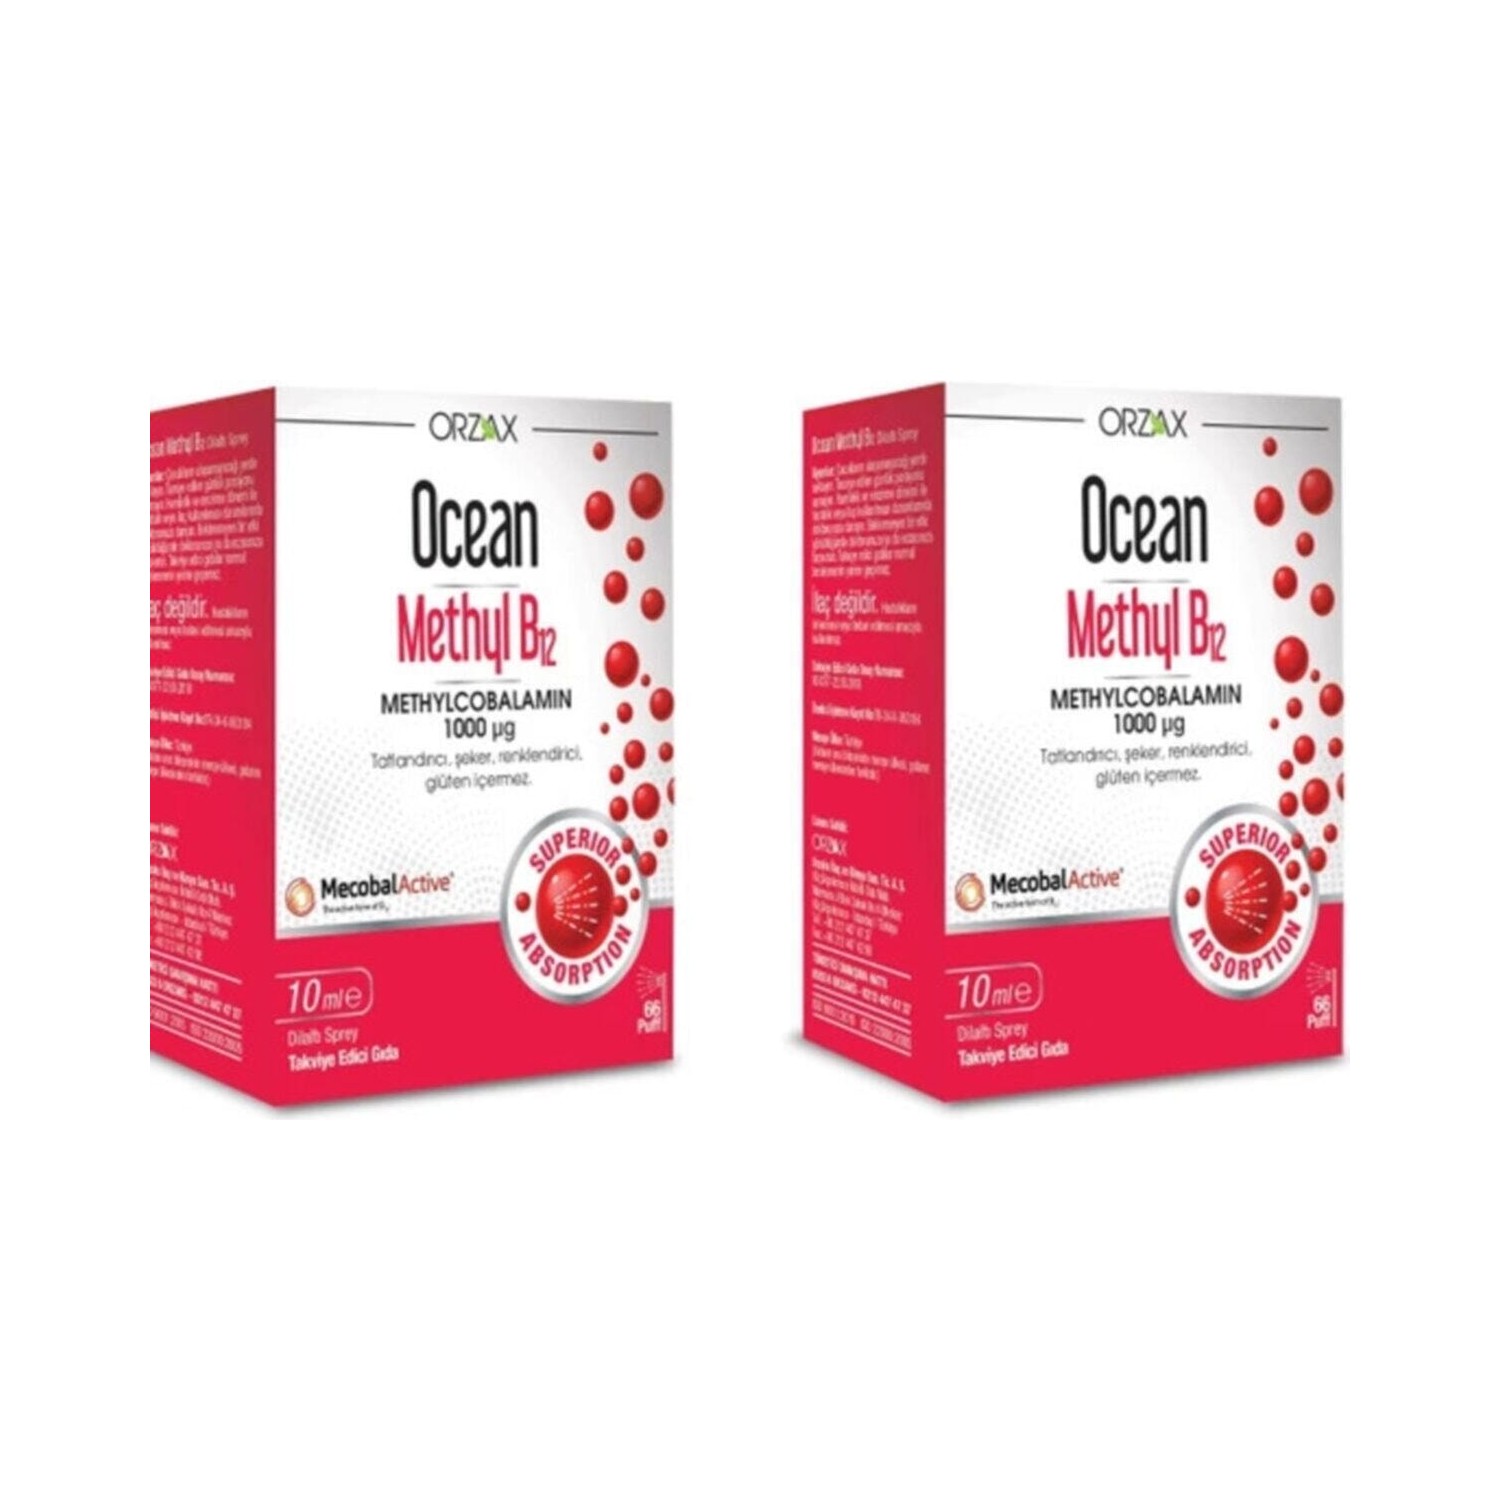 цена Метил B12 Ocean 1000 мг, 2 упаковки по 10 мл